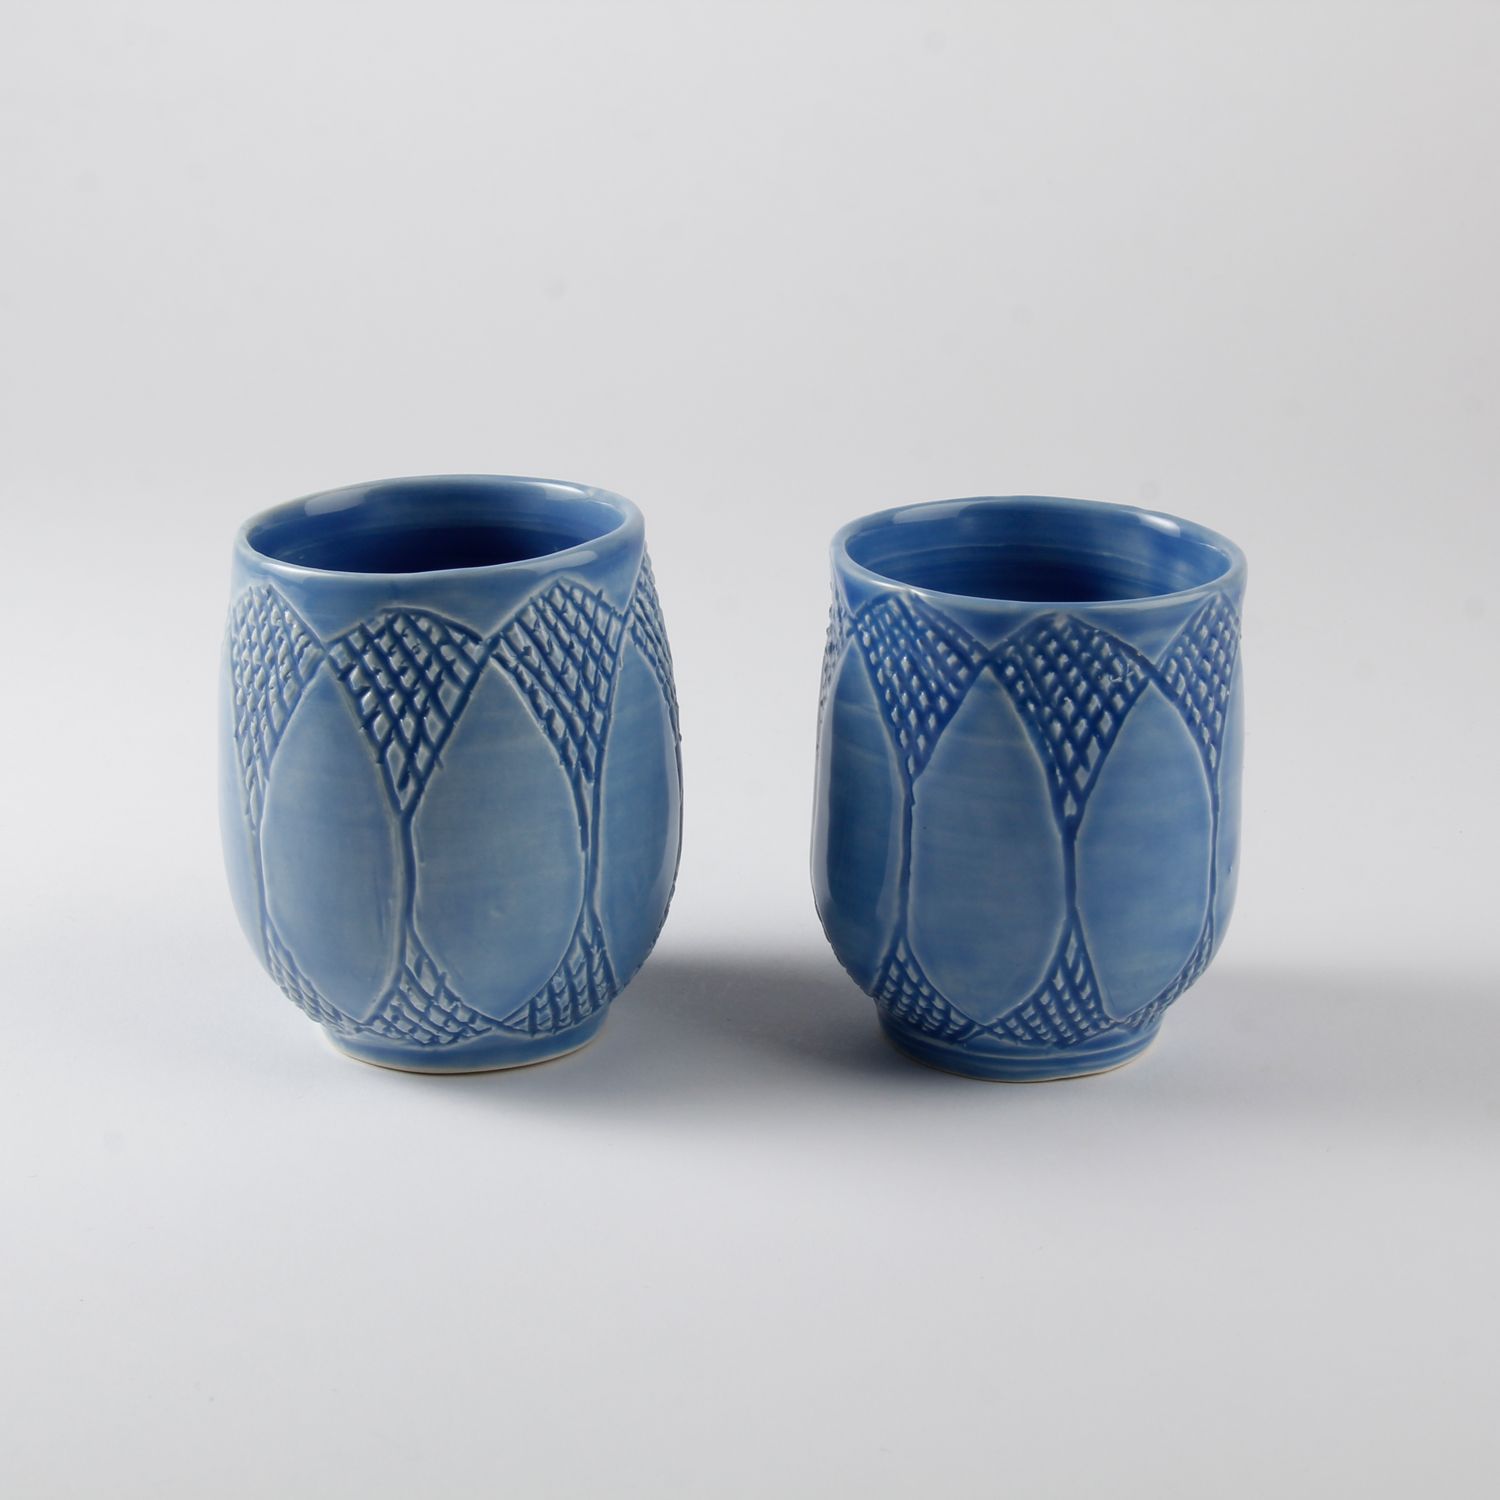 Arlene Kushnir: Carved Cup – Sky Blue Product Image 2 of 2